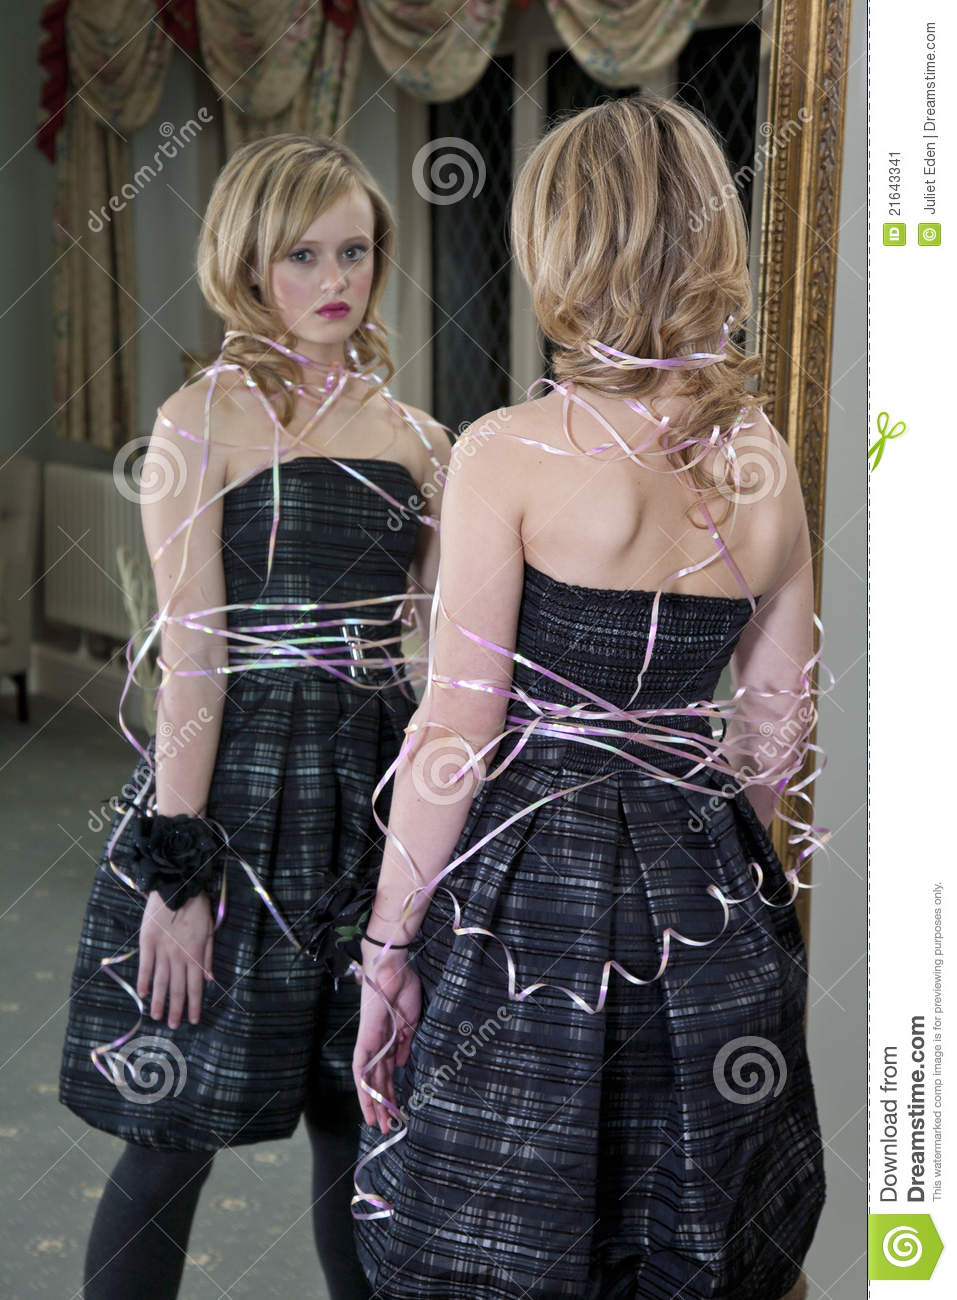 Girls tied up having teen